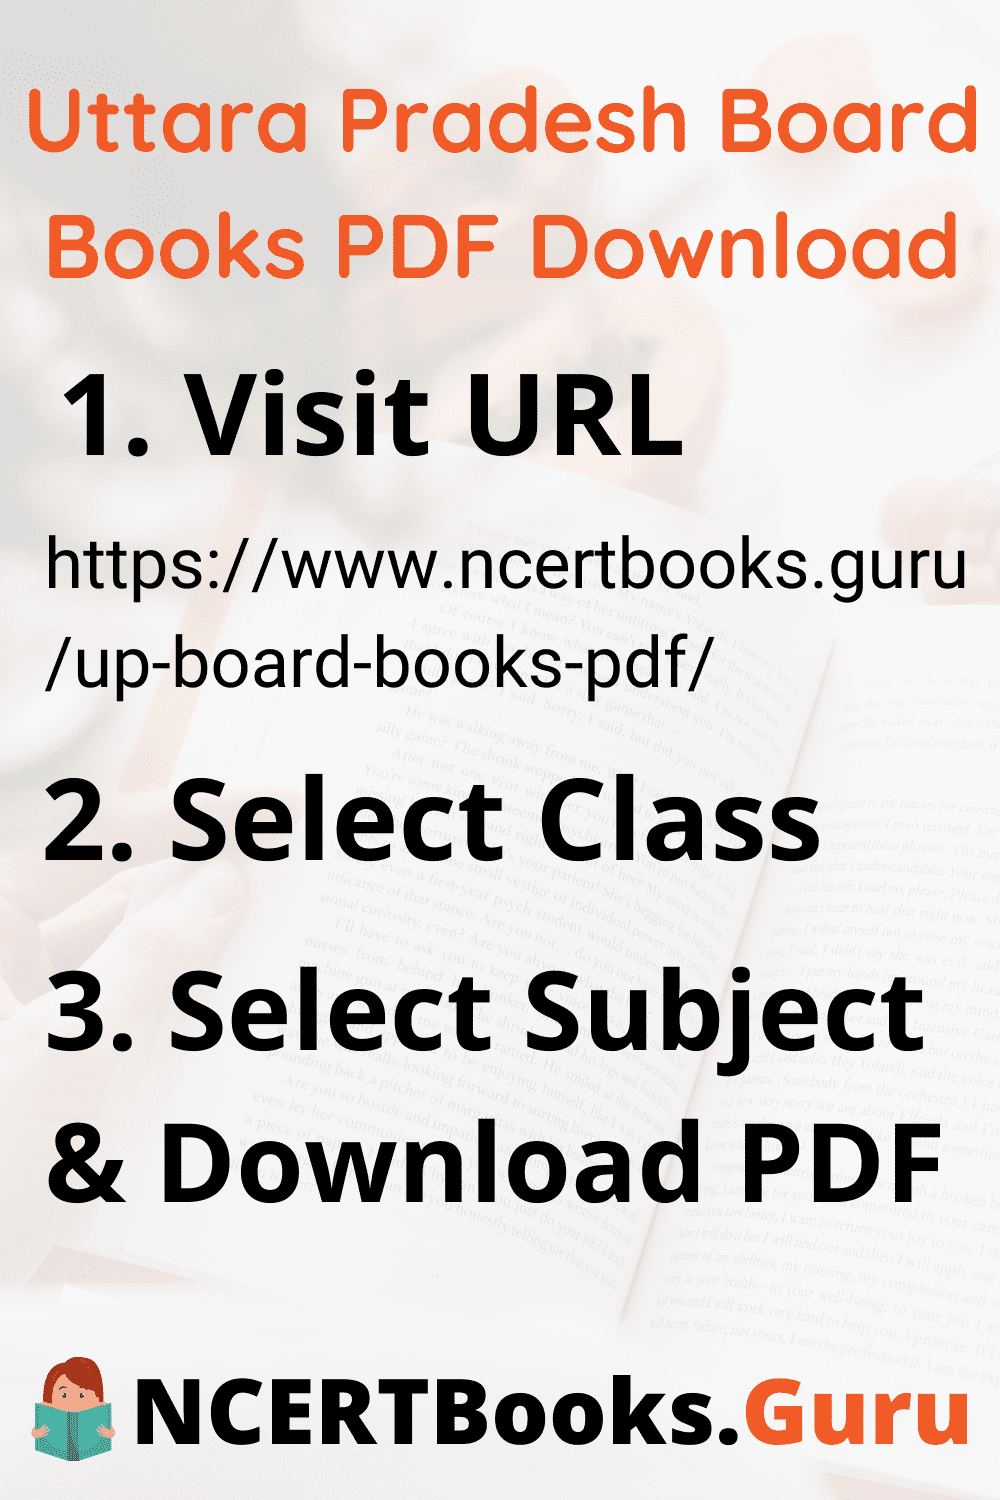 Uttara Pradesh Board Books PDF Download